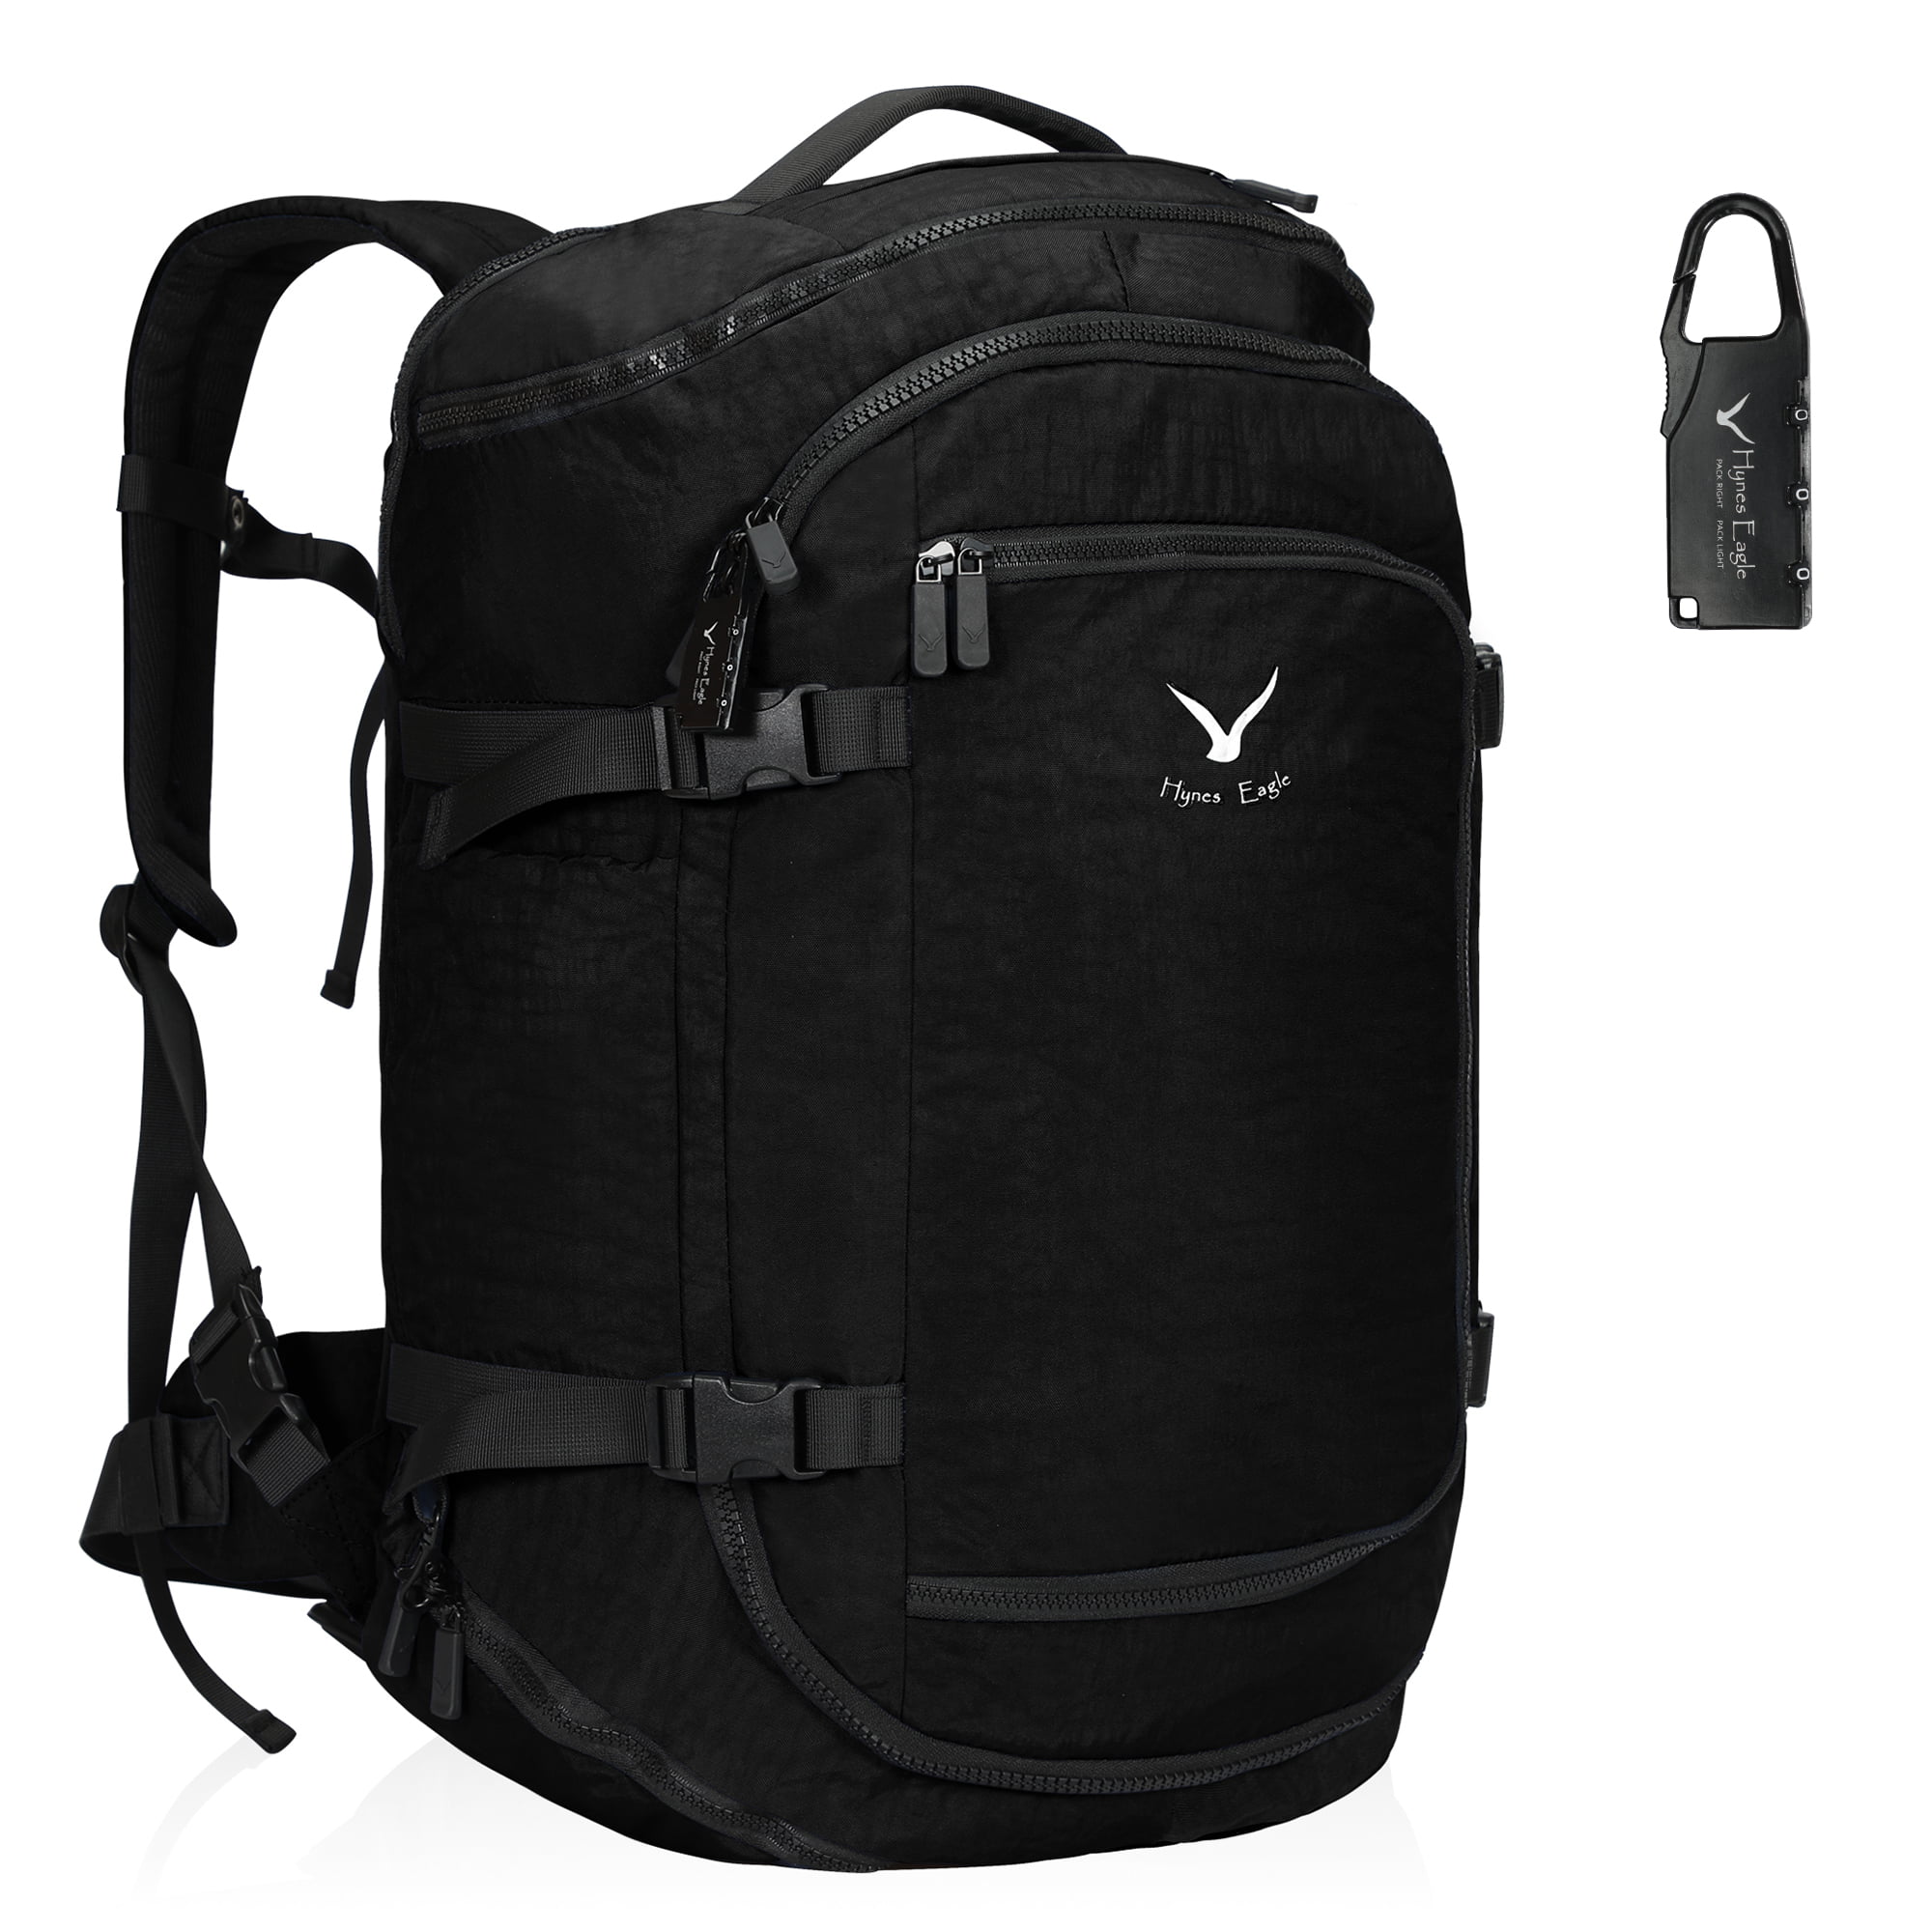 Hynes Eagle 45L Travel Backpack Carry on Airplane Approves Weekender Bag Black 